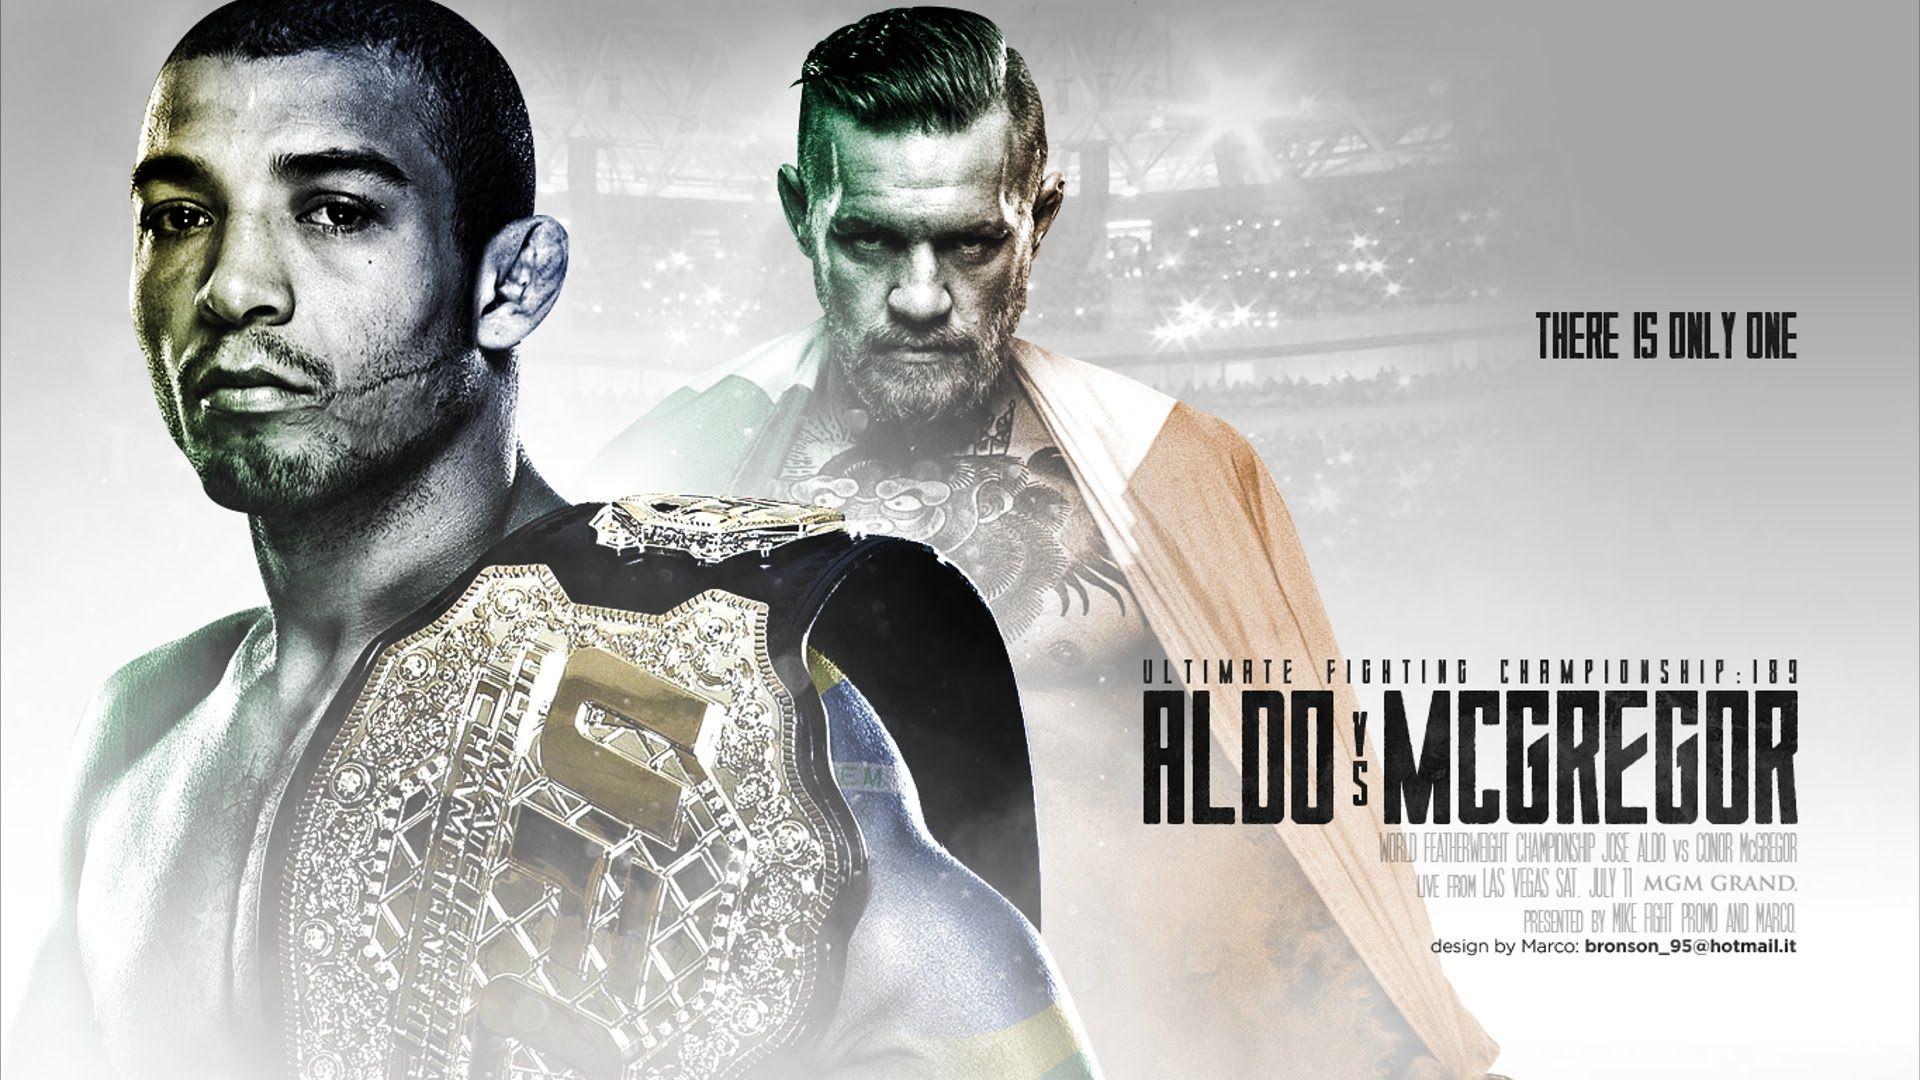 UFC Fighters Predict Jose Aldo vs. Conor McGregor